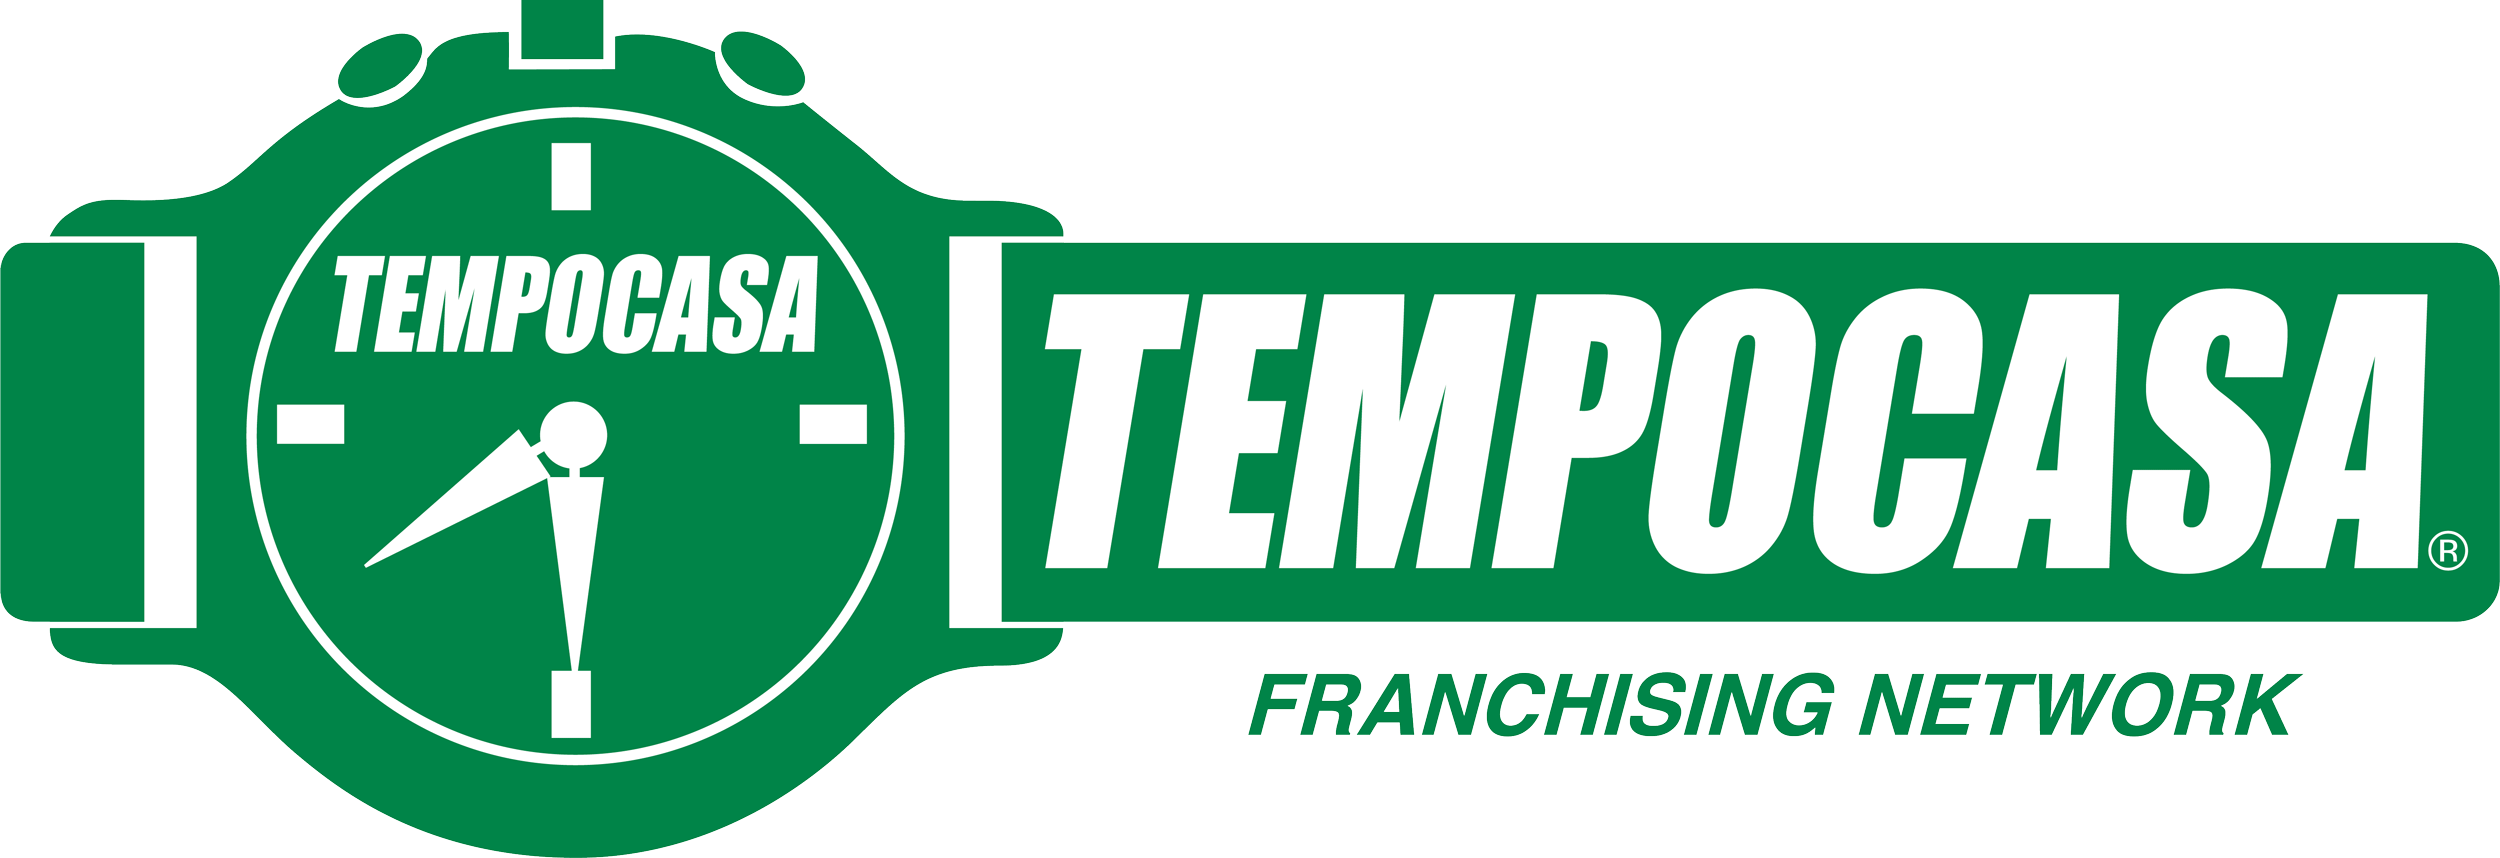 Opera - Tempocasa